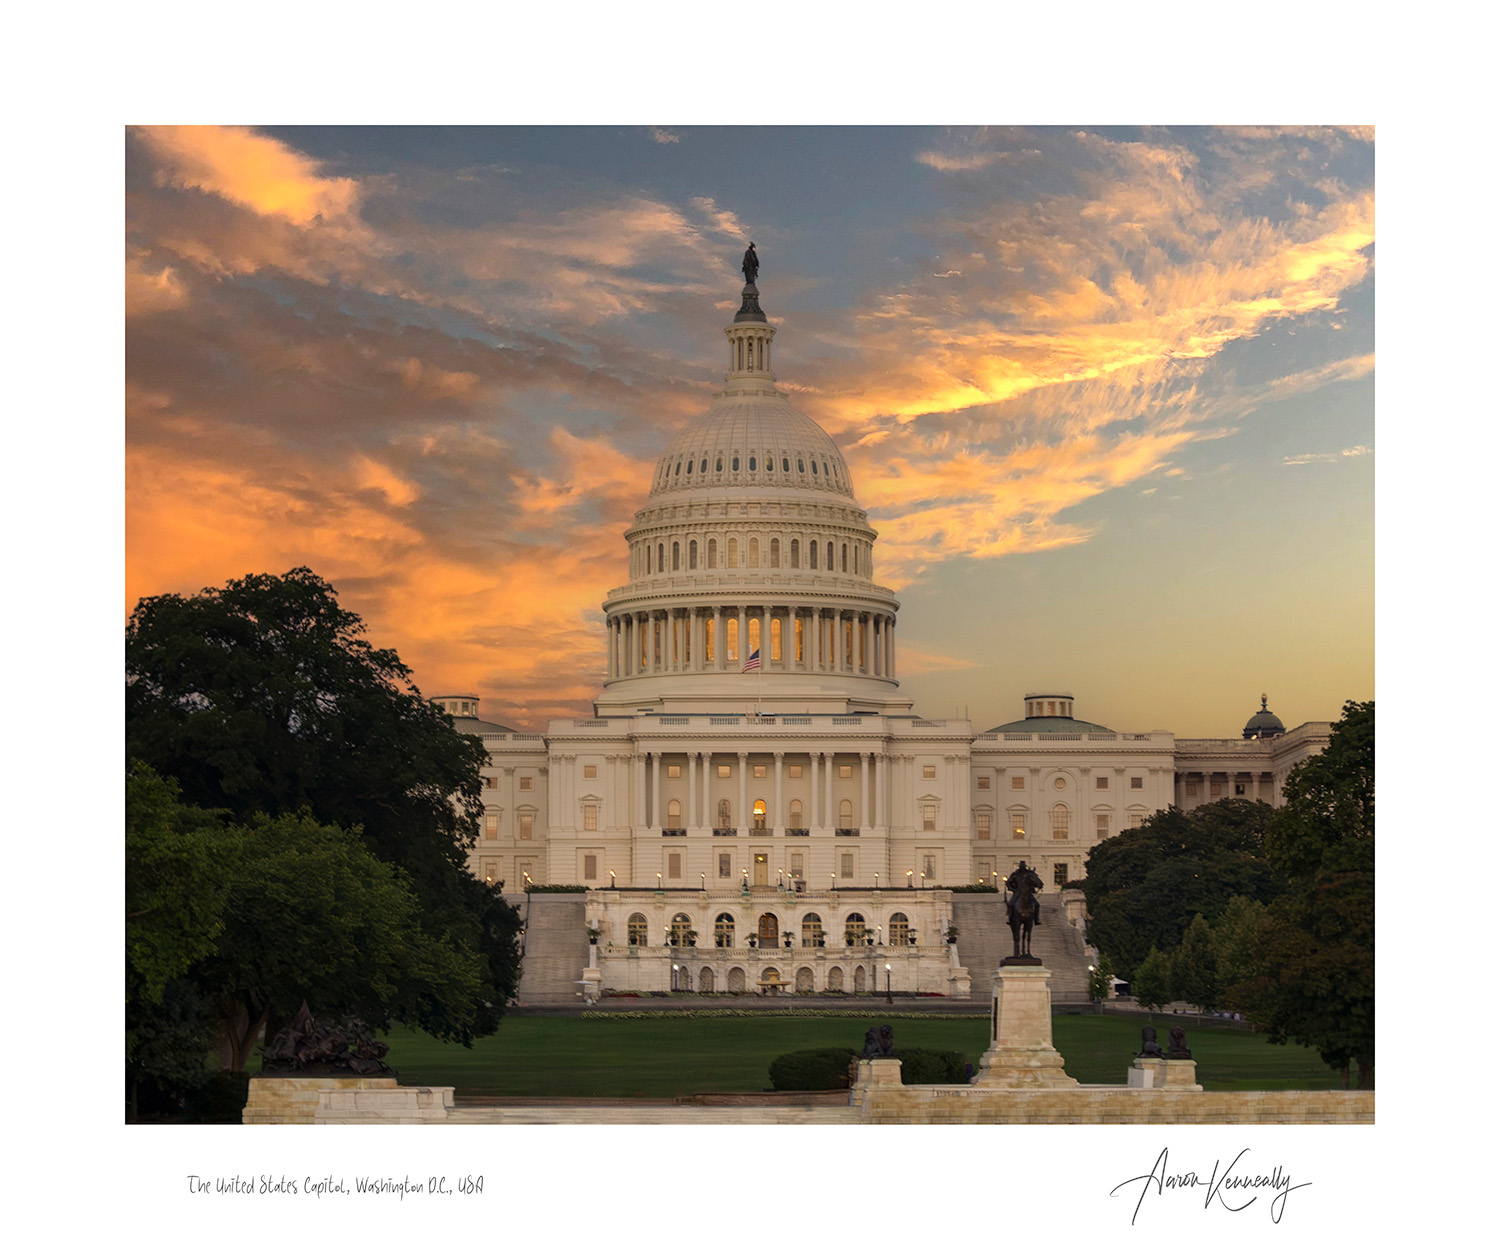 The United States Capitol, Washington D.C., USA